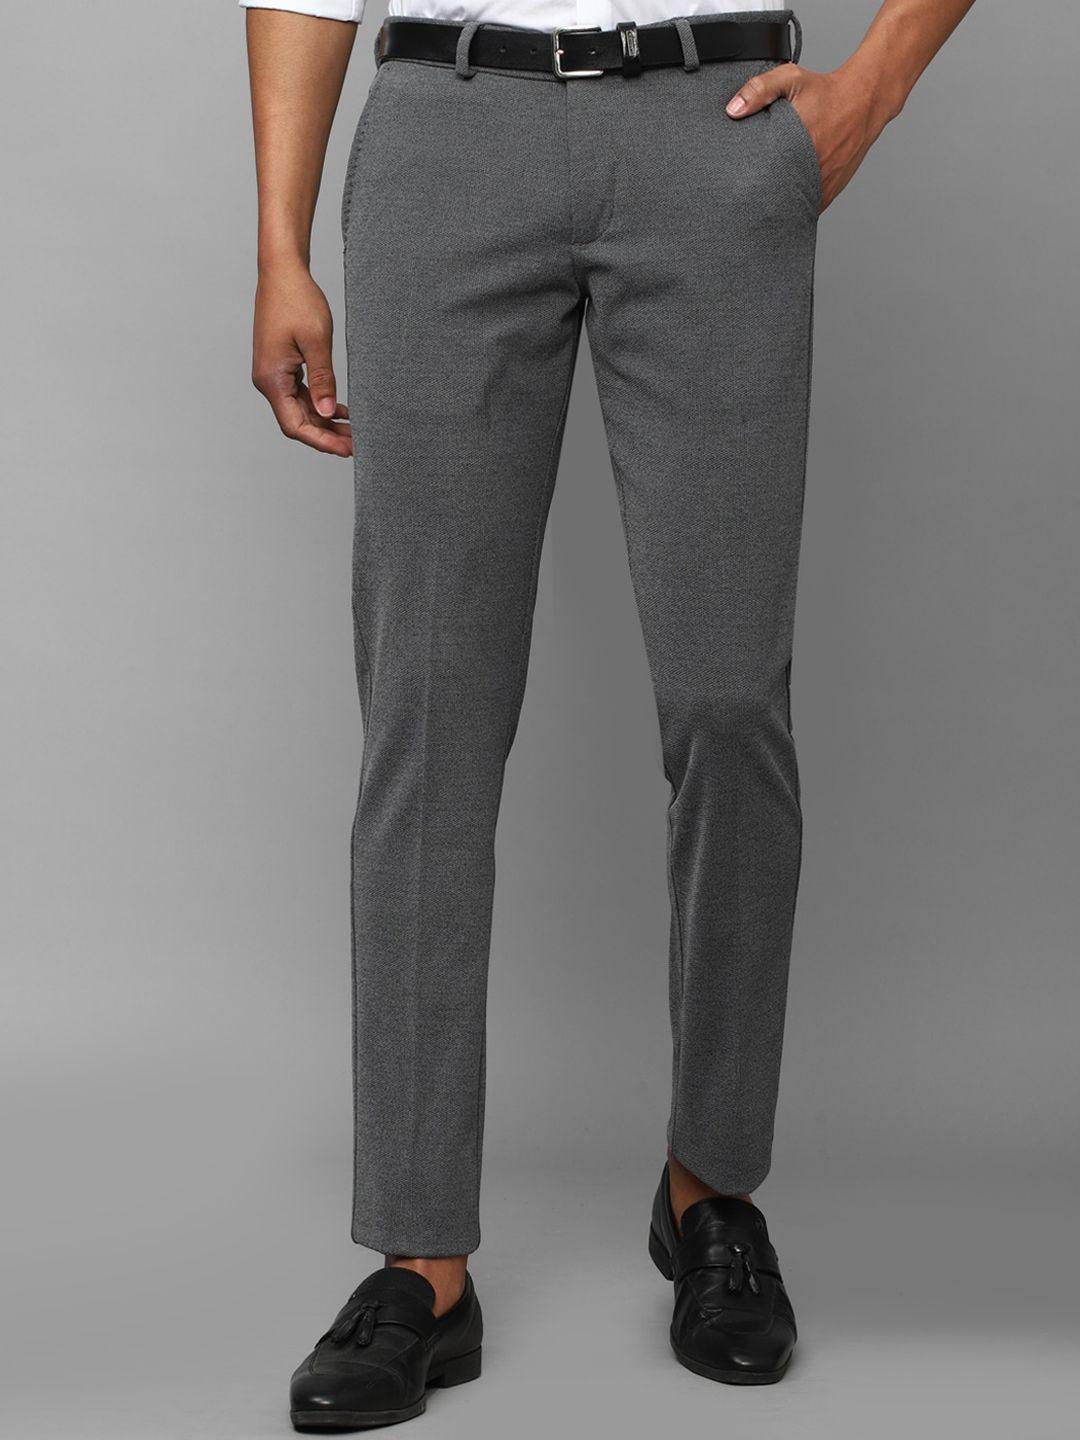 allen-solly-men-textured-slim-fit-formal-trousers